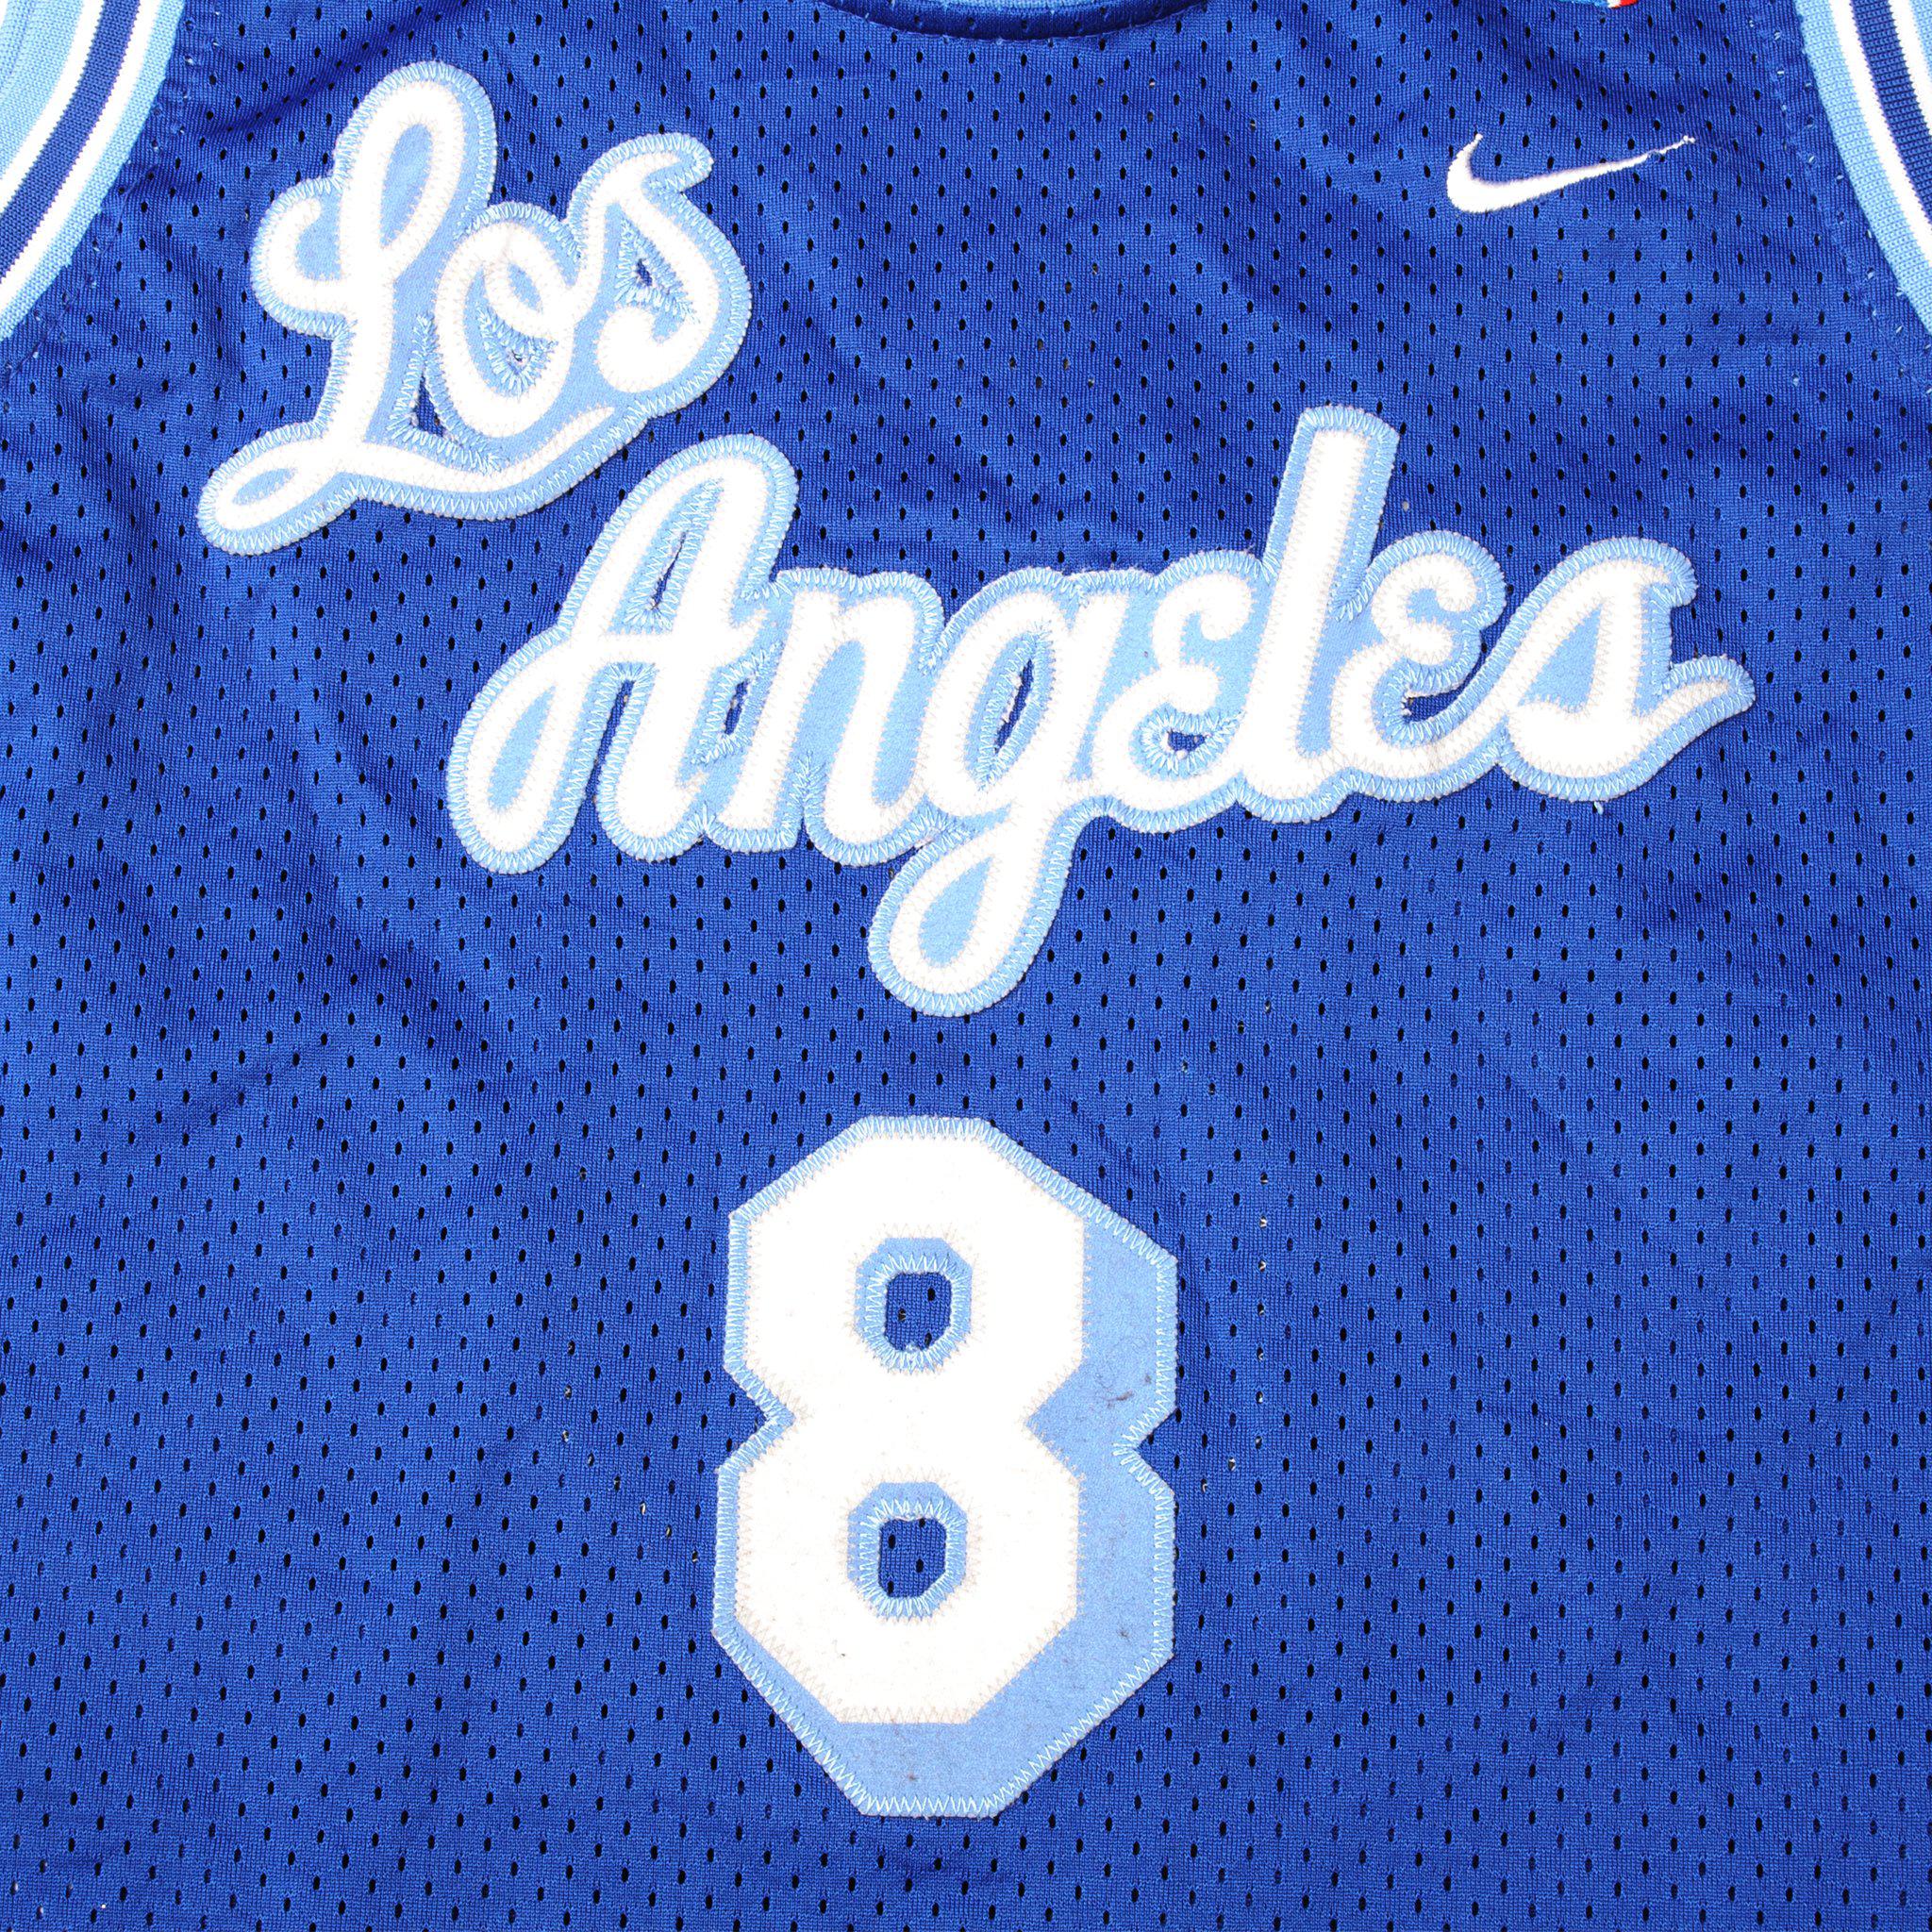 VINTAGE LOS ANGELES LAKERS JERSEY SHIRT NIKE BASKETBALL NBA #8 KOBE BRYANT  NWT